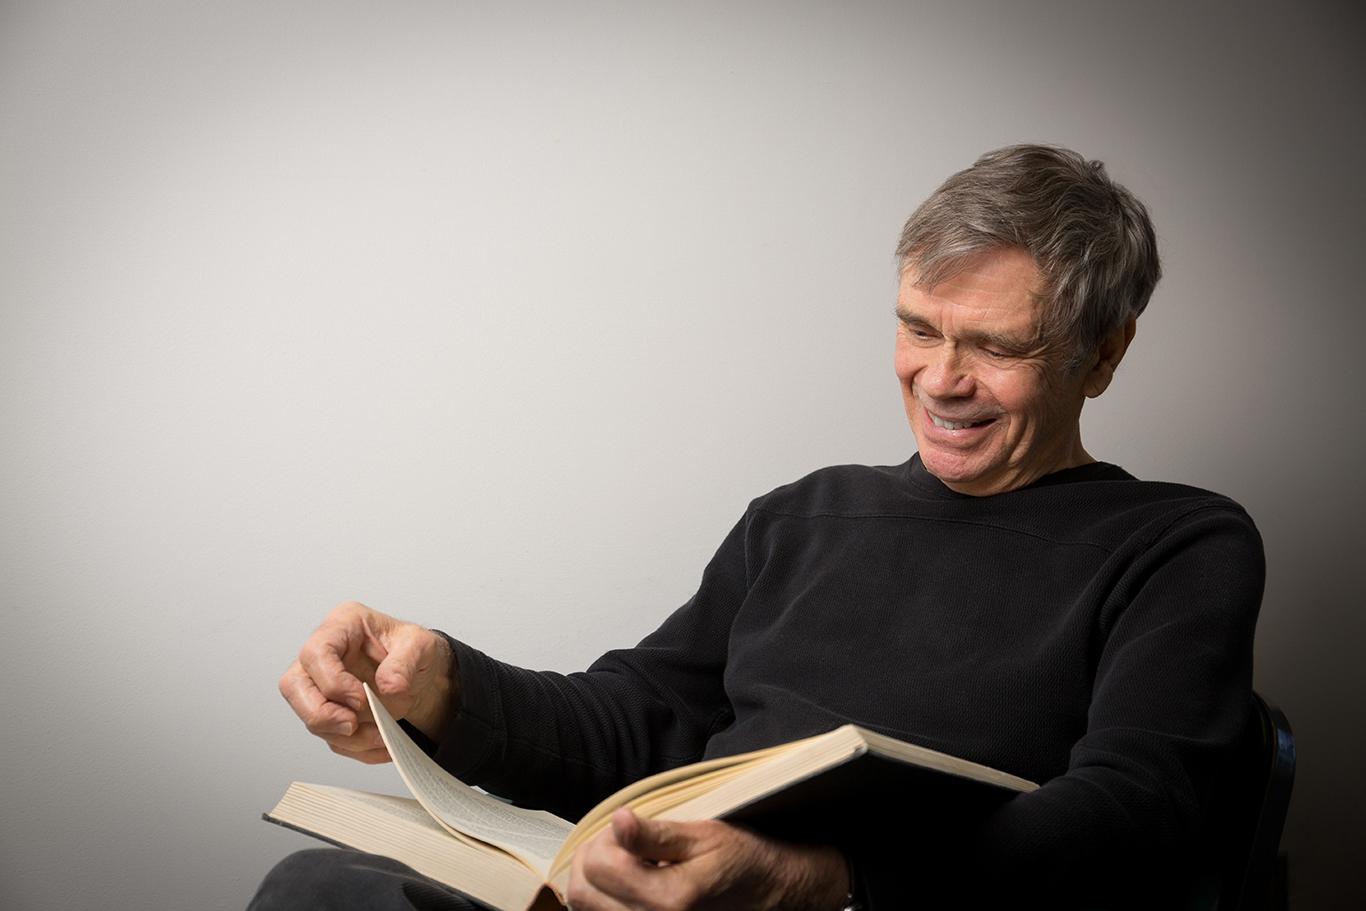 Photo of Professor Sid homan reading a book.